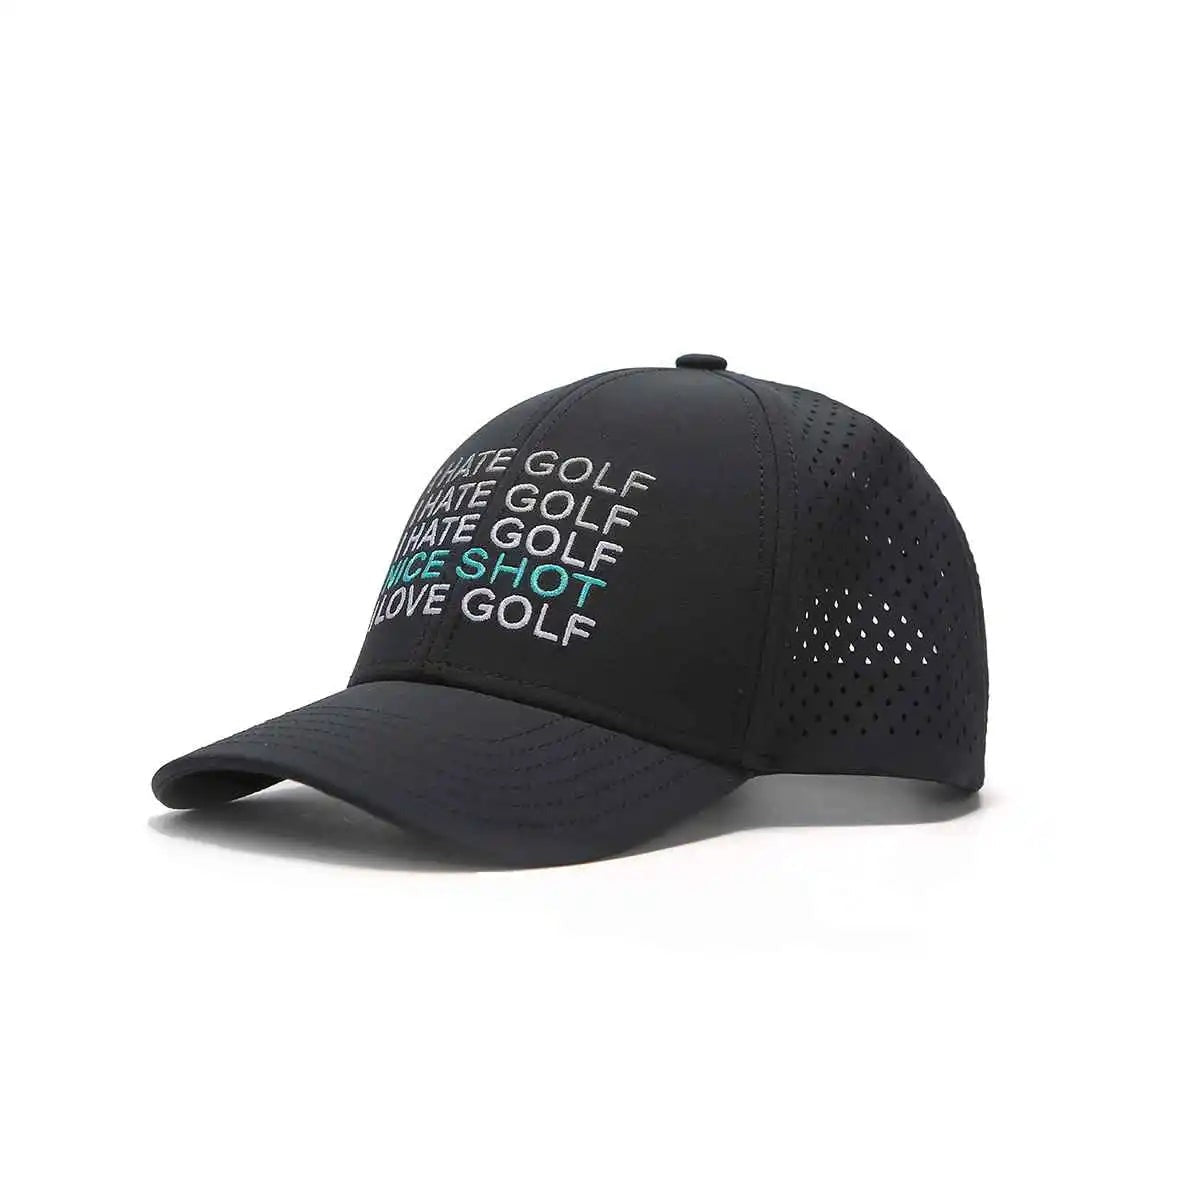 AGORA l GOLF GODS - Tour Pro I Hate Golf Hat in Black